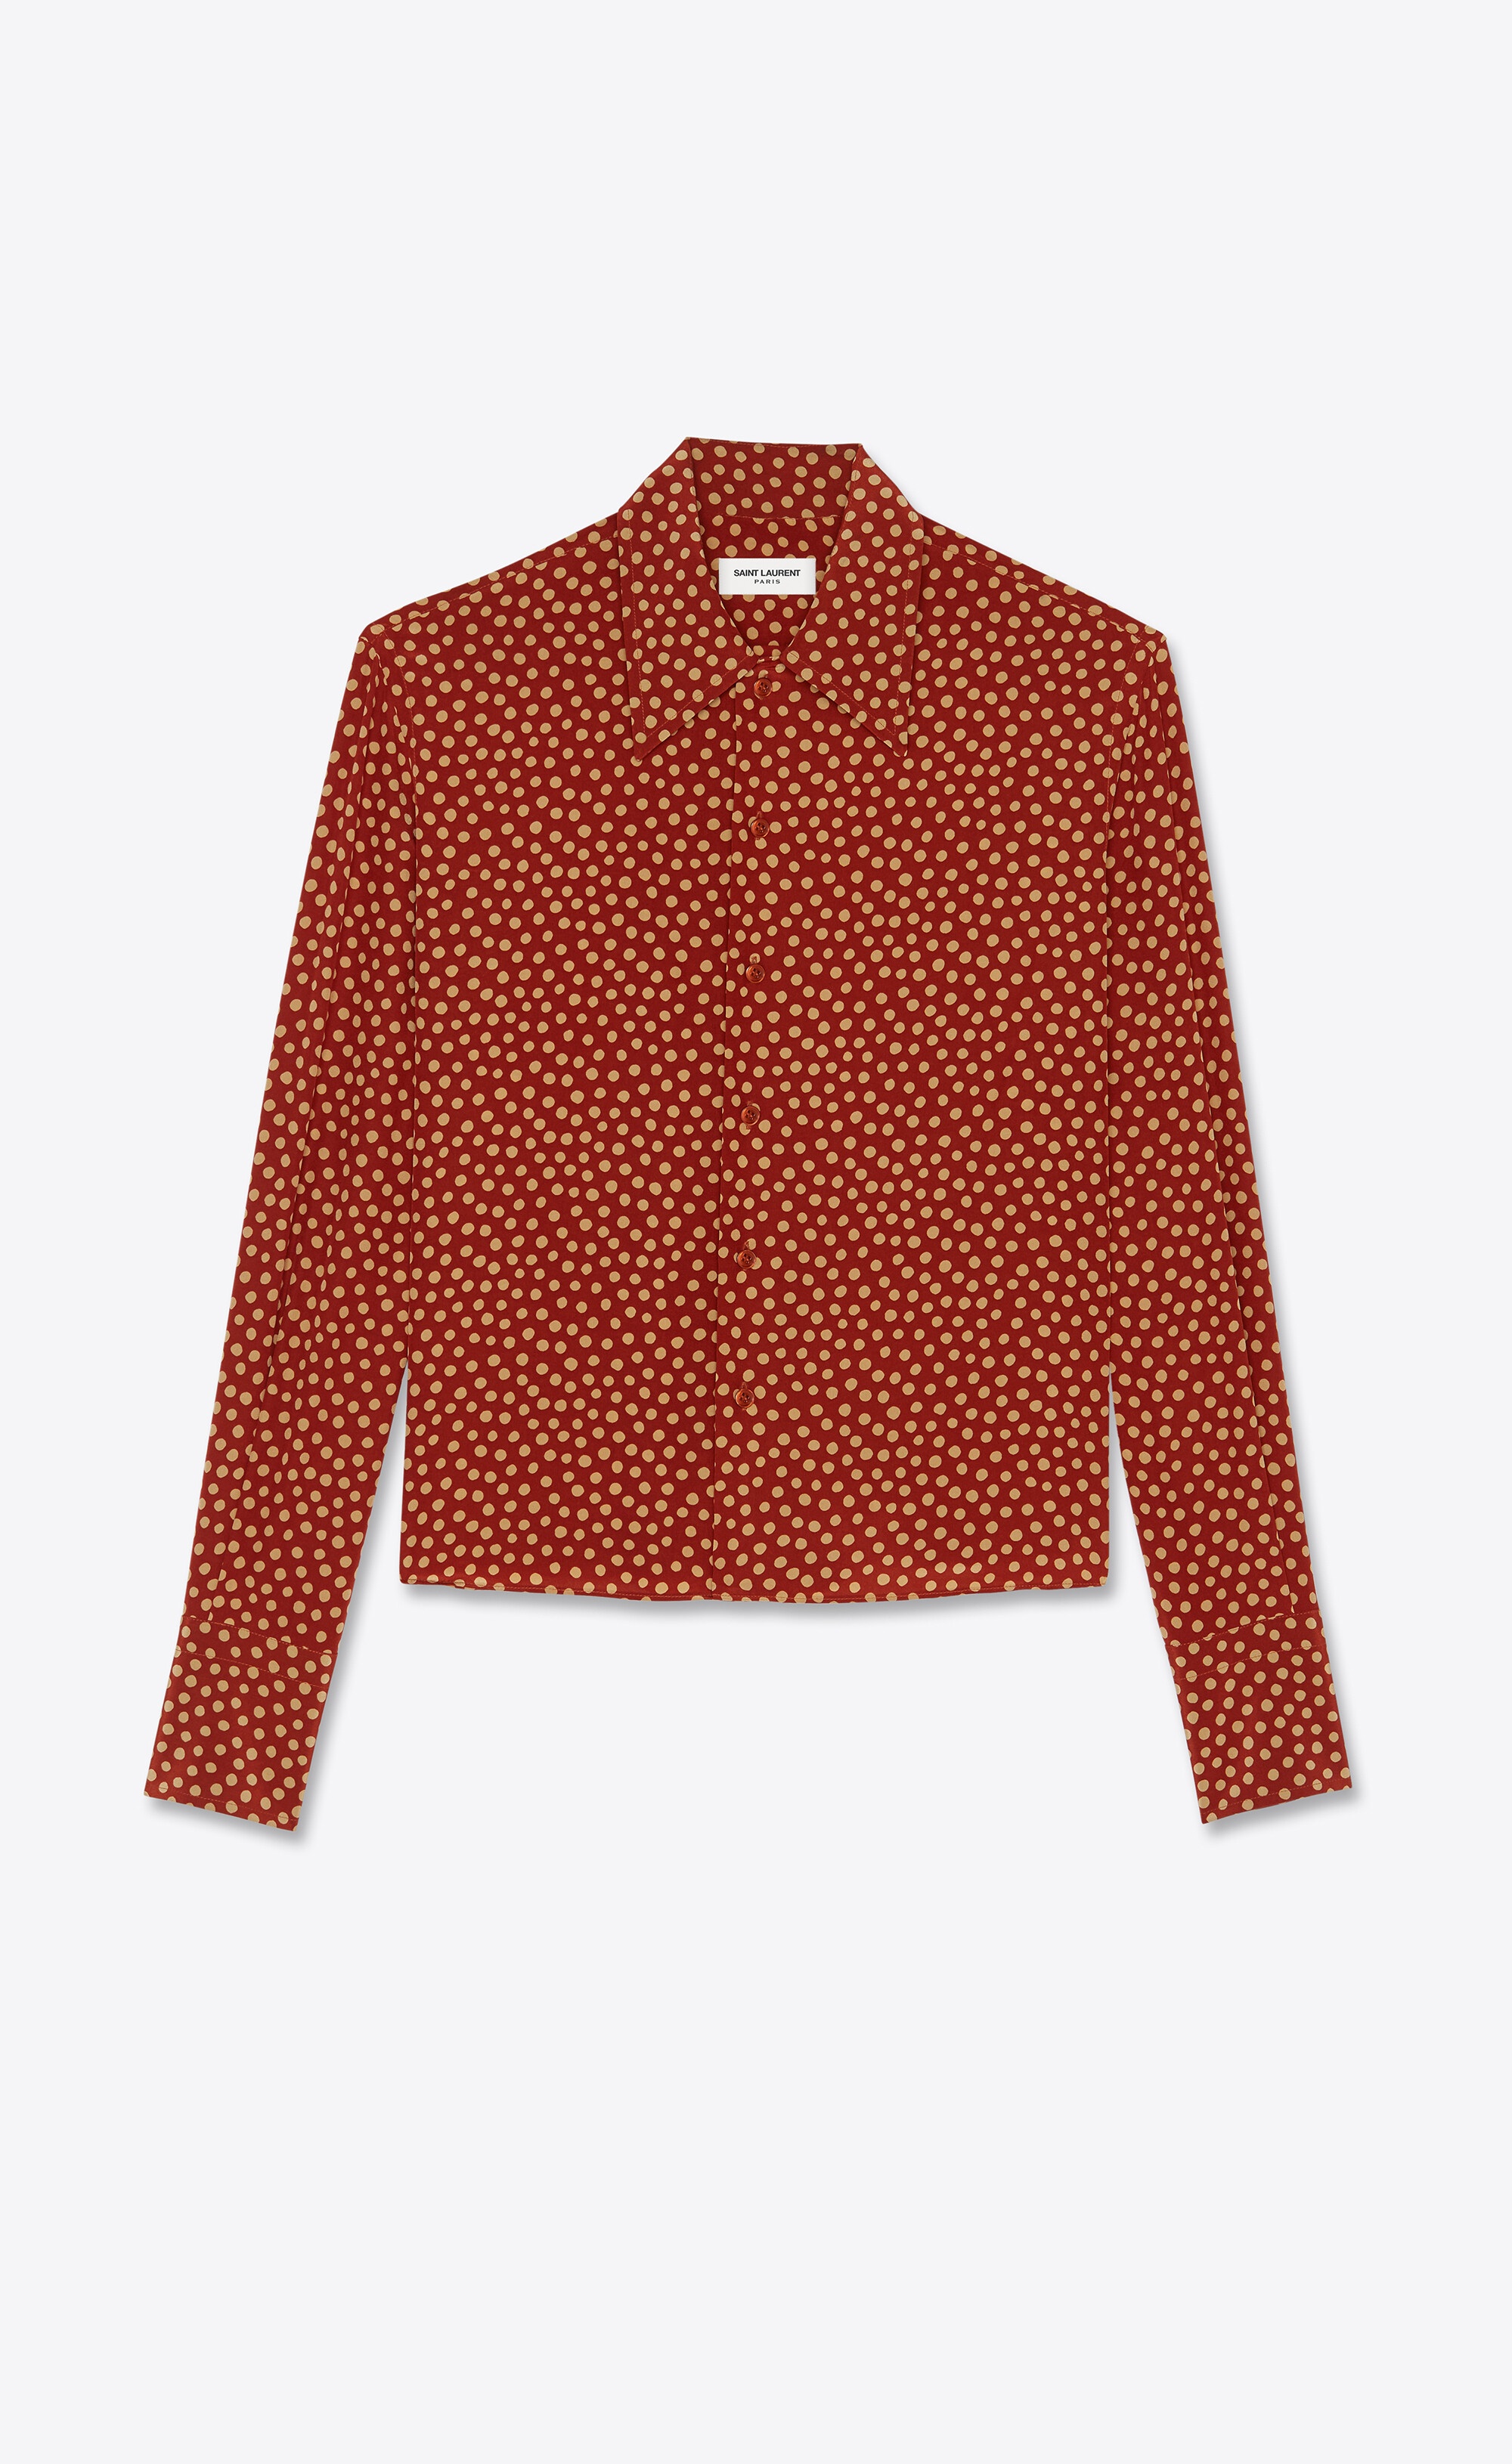 pointed-collar shirt in fawn polka dot silk crepe de chine - 1